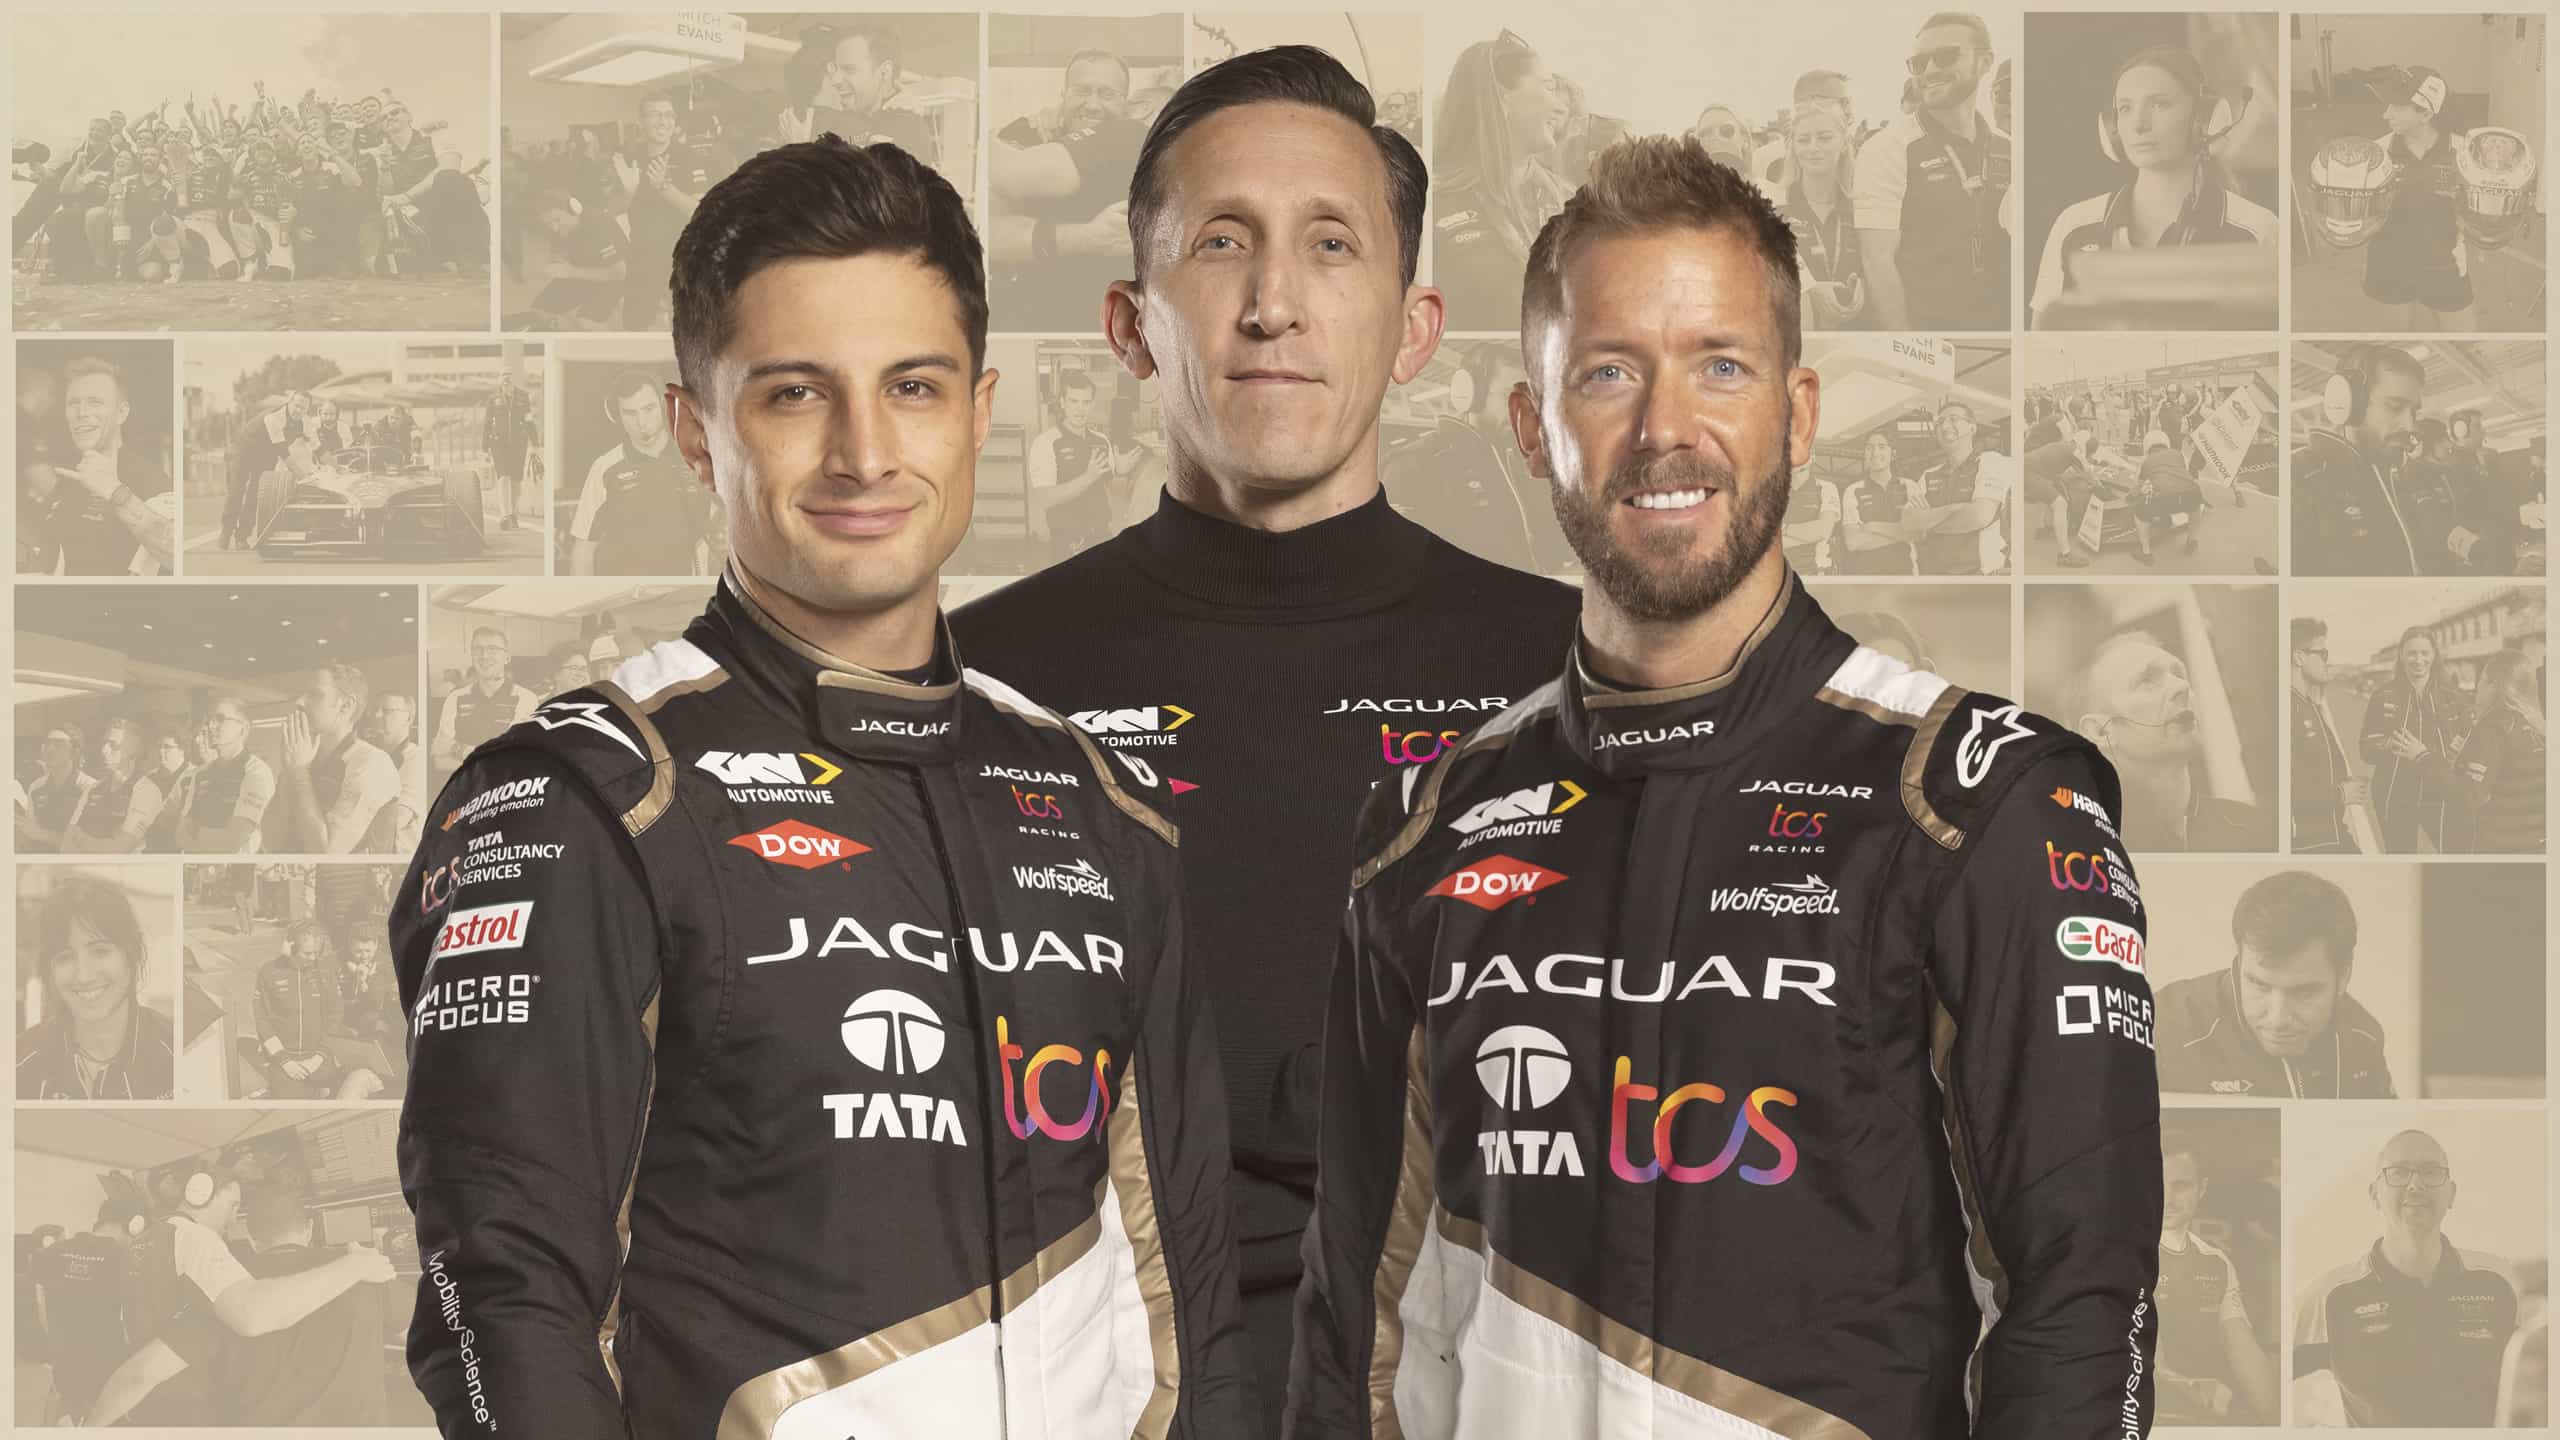 Jaguar championship win team